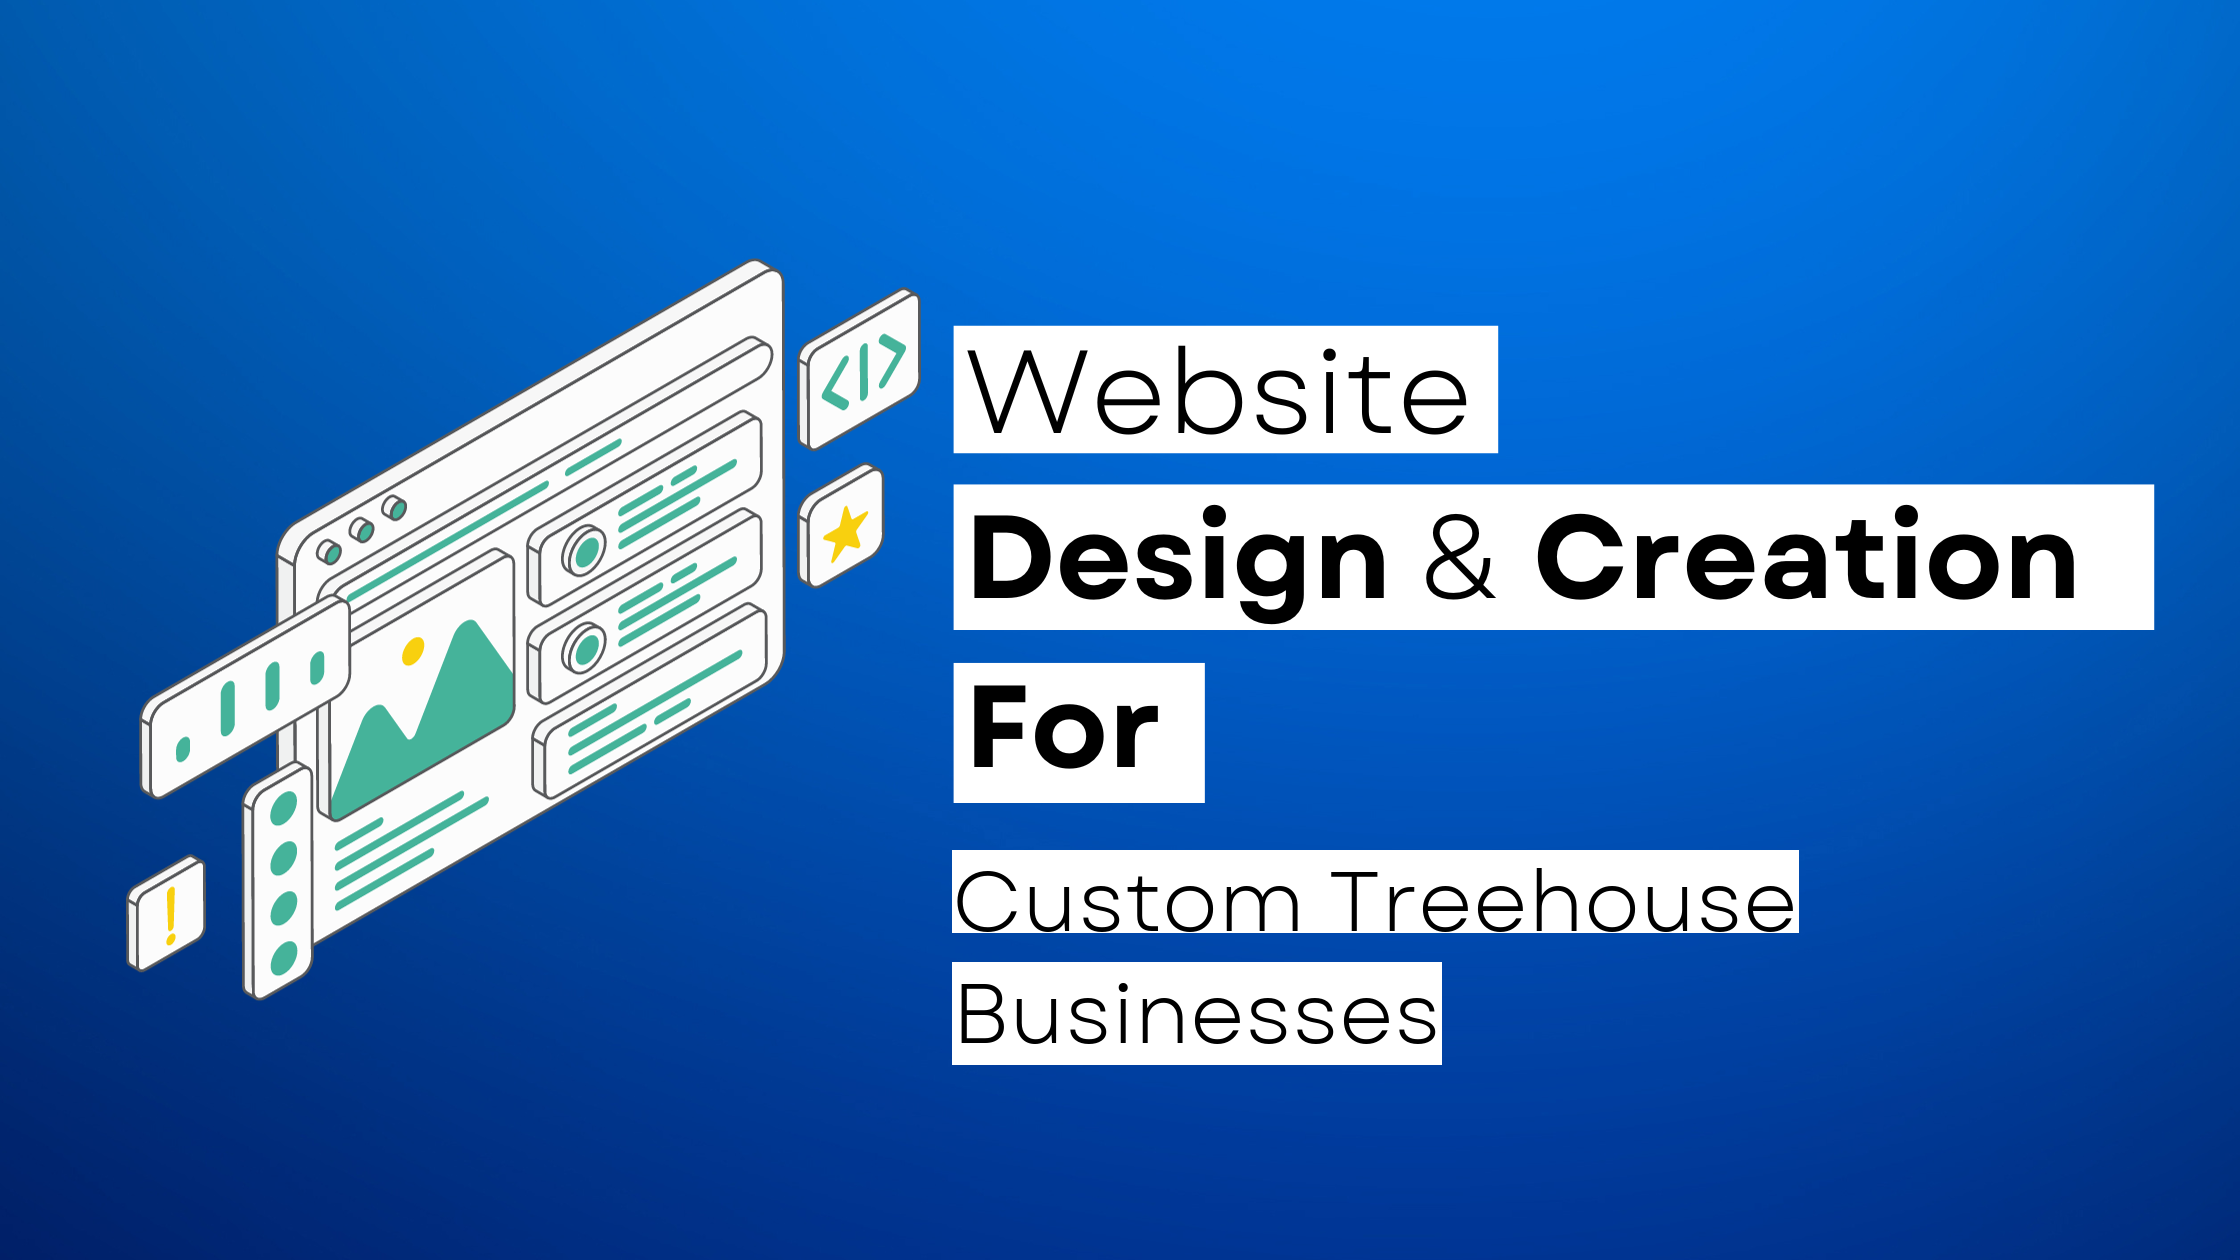 How to start a Custom Treehouse  website